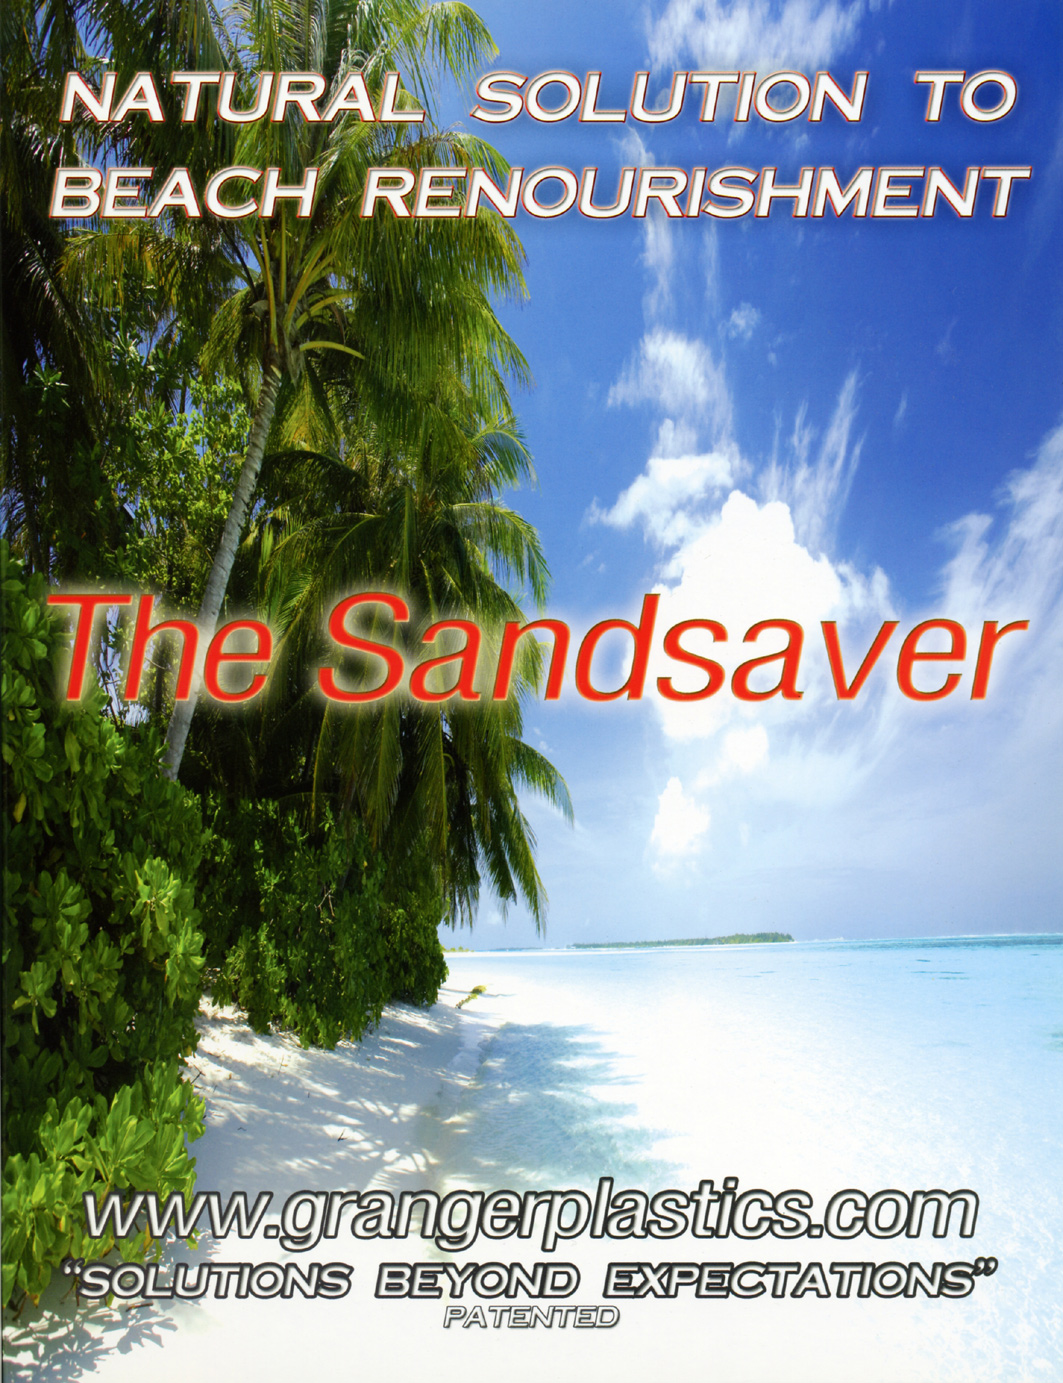 Sandsaver Beach Erosion Solution Information, Beach Dredging Alternative